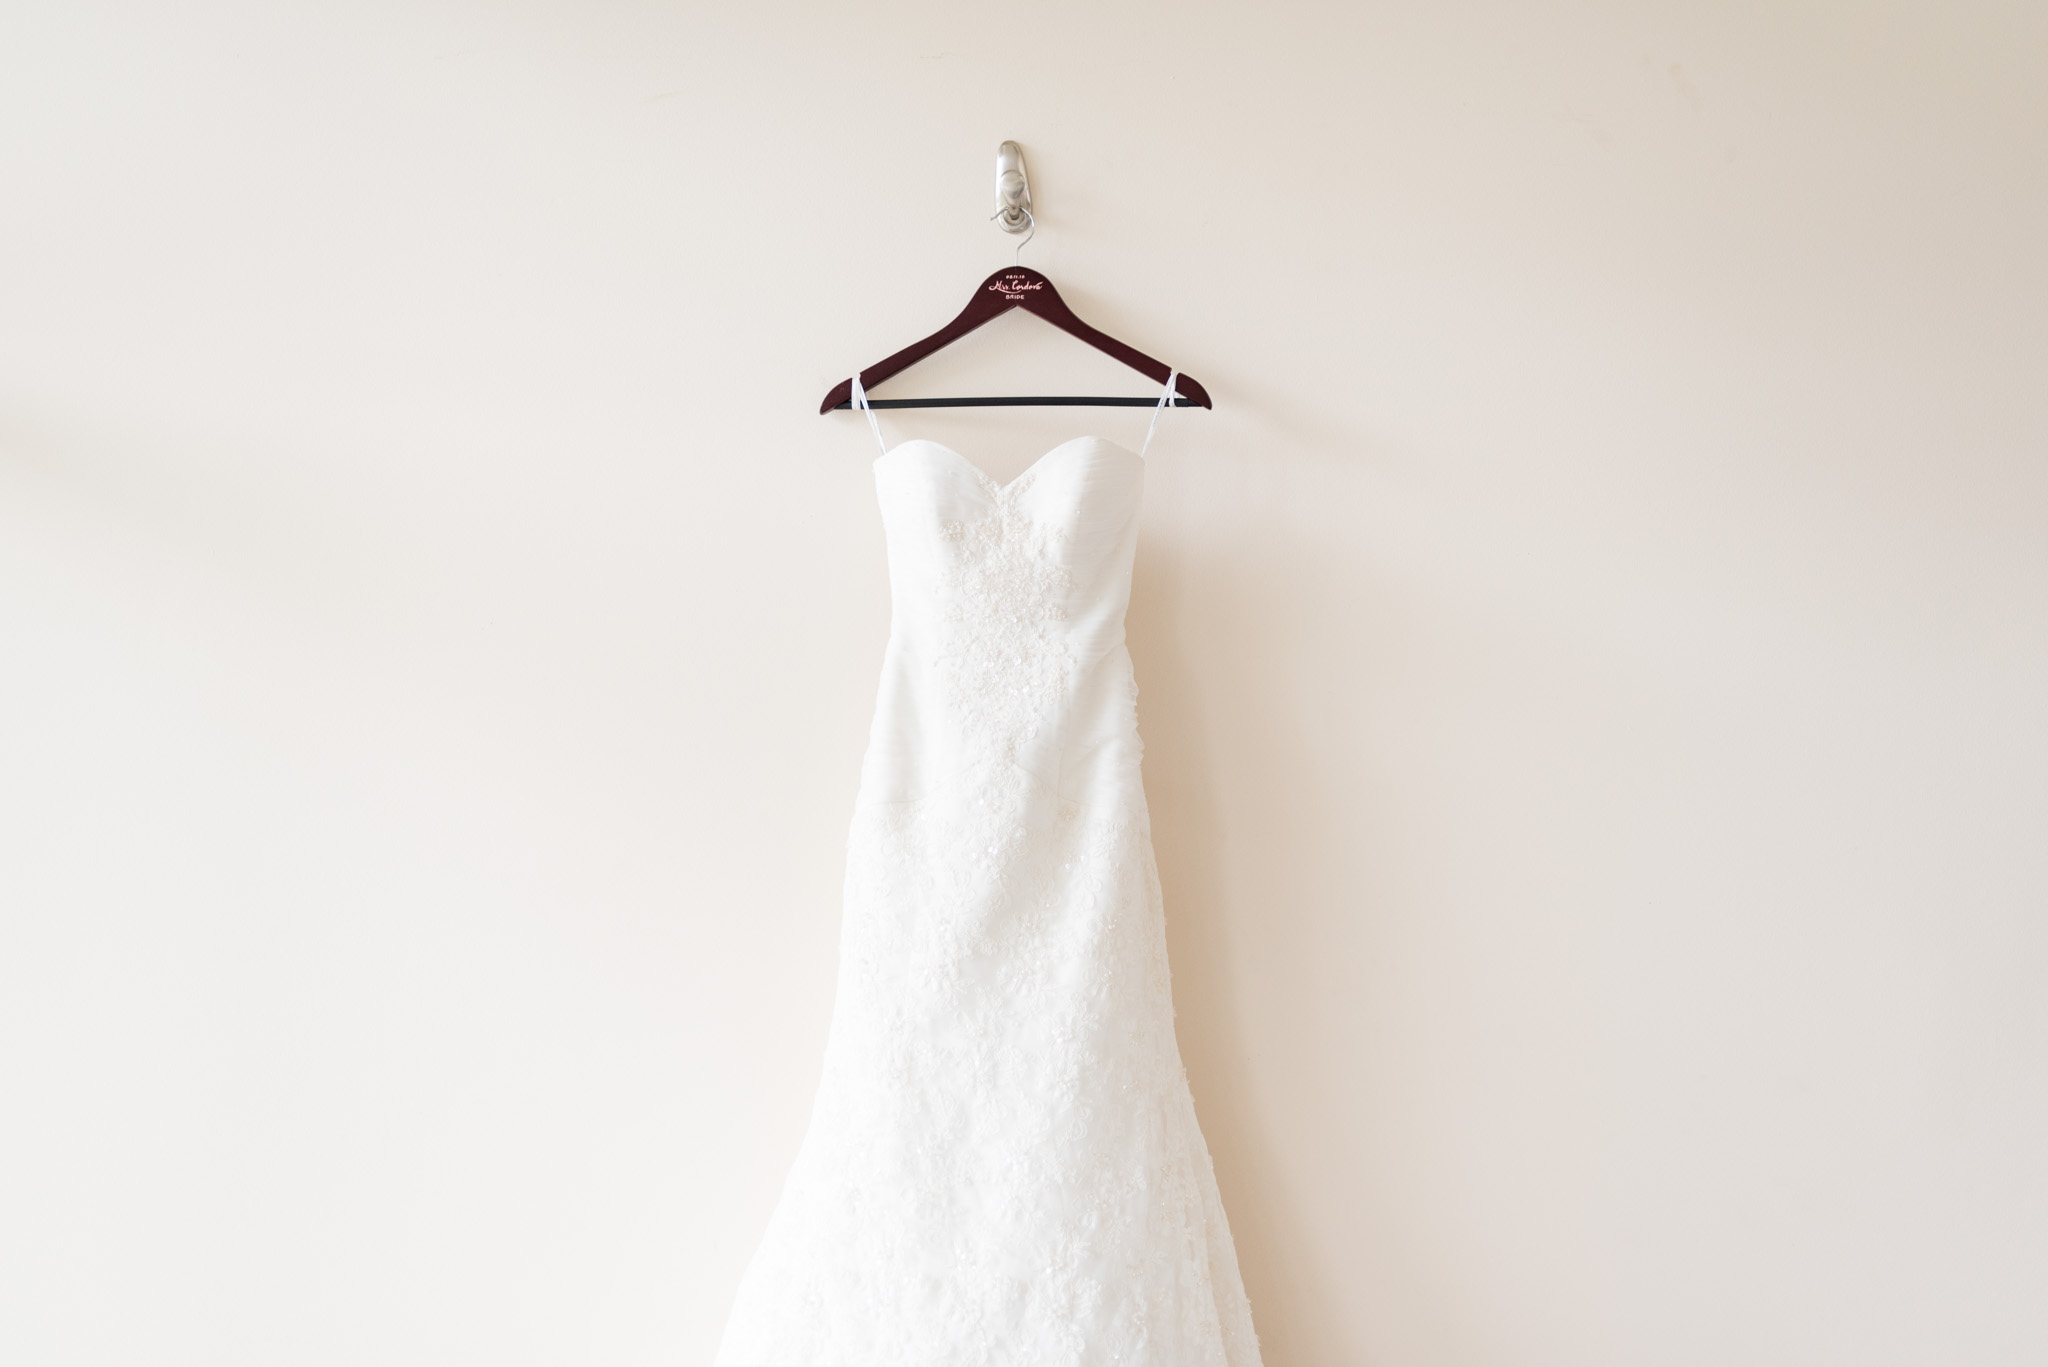 Brides dress hangs on cream wall.